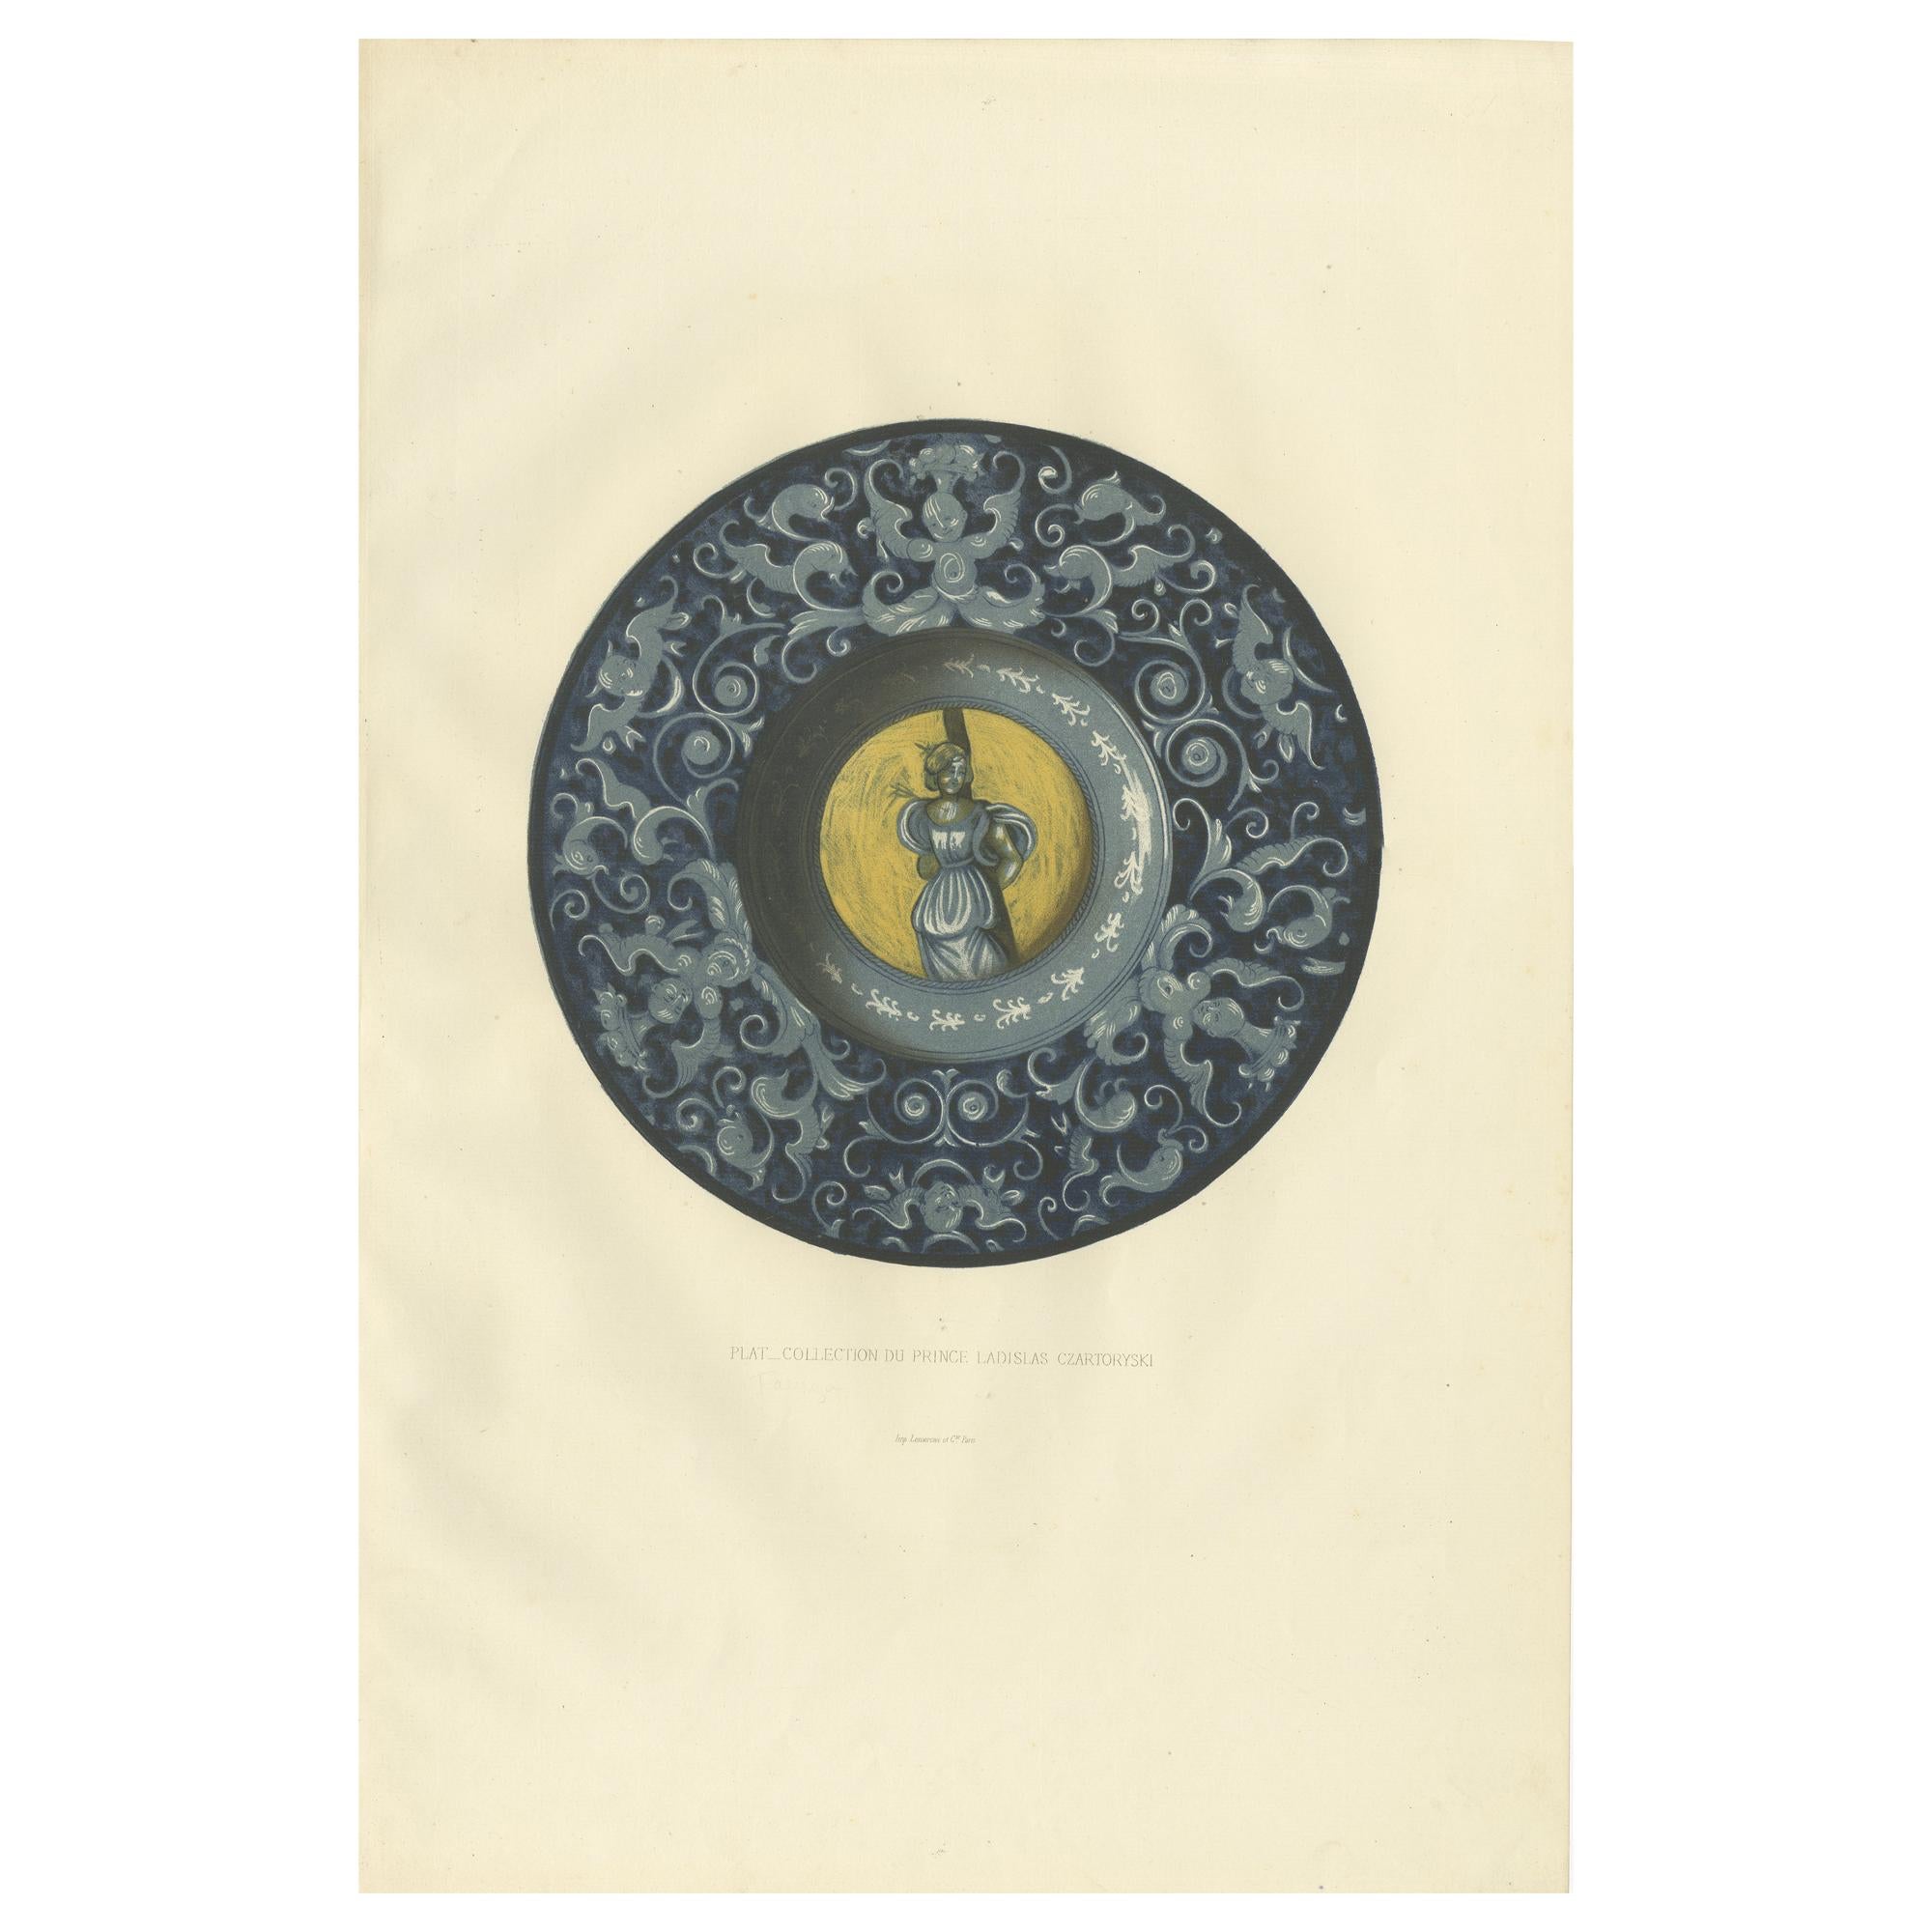 Antique Print of a Plate of Prince Ladislas Czartoryski by Delange, '1869'